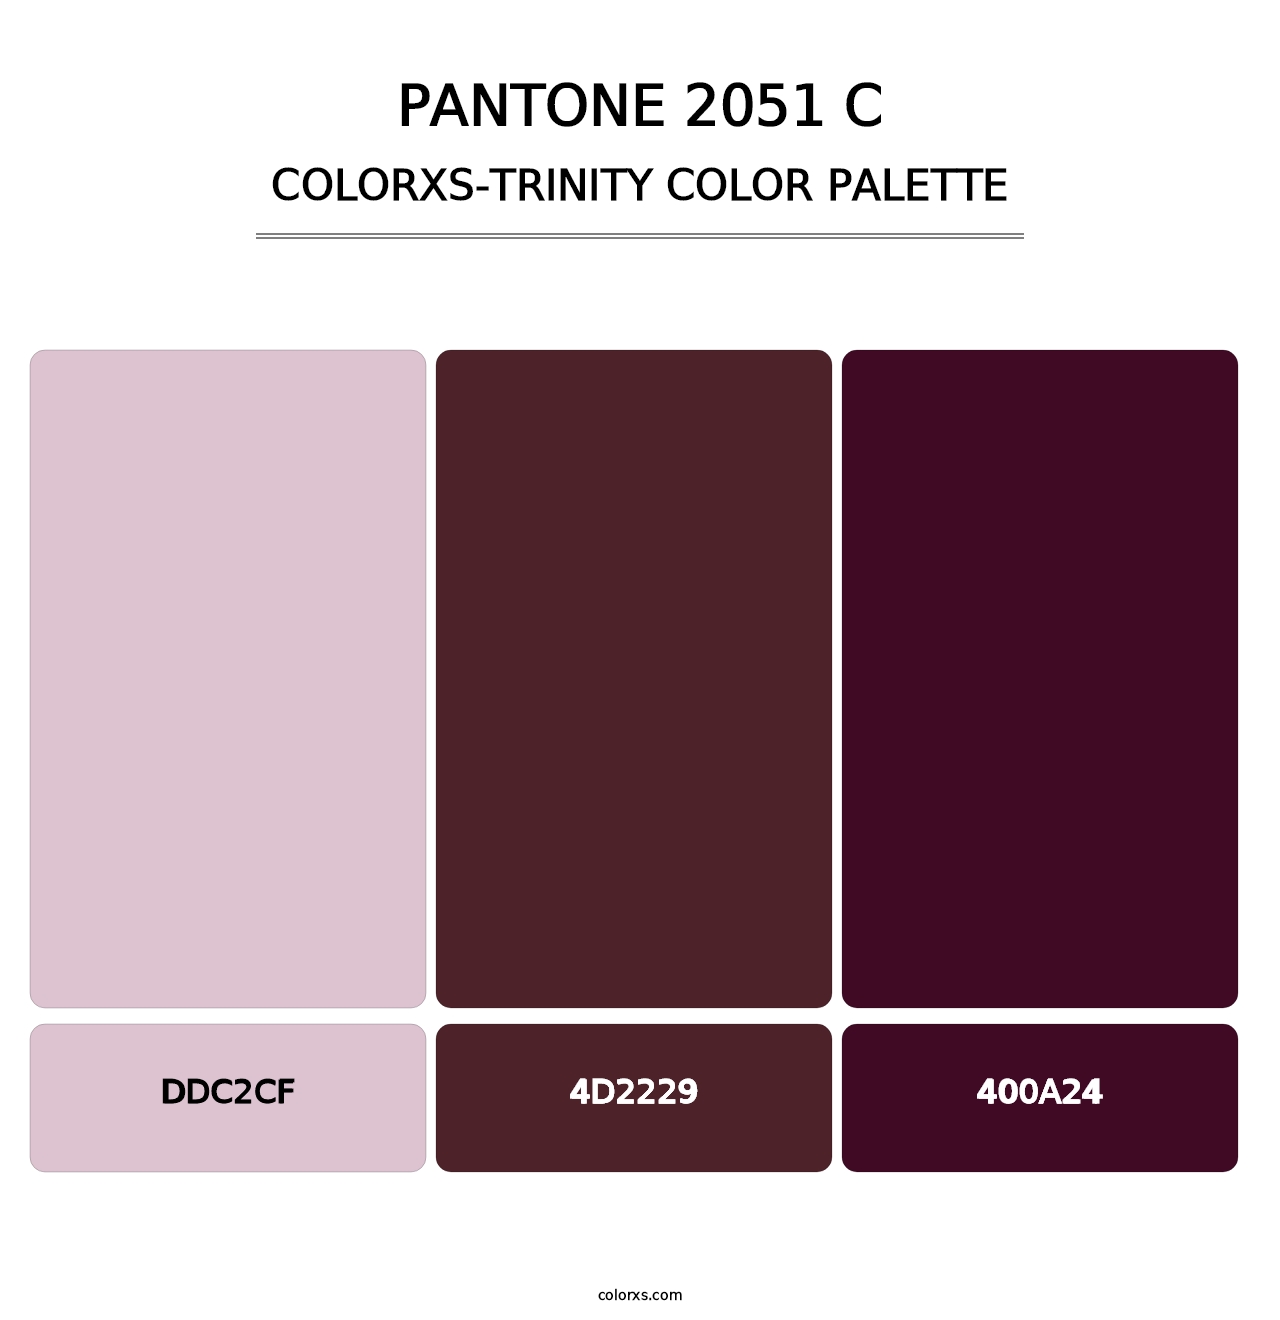 PANTONE 2051 C - Colorxs Trinity Palette